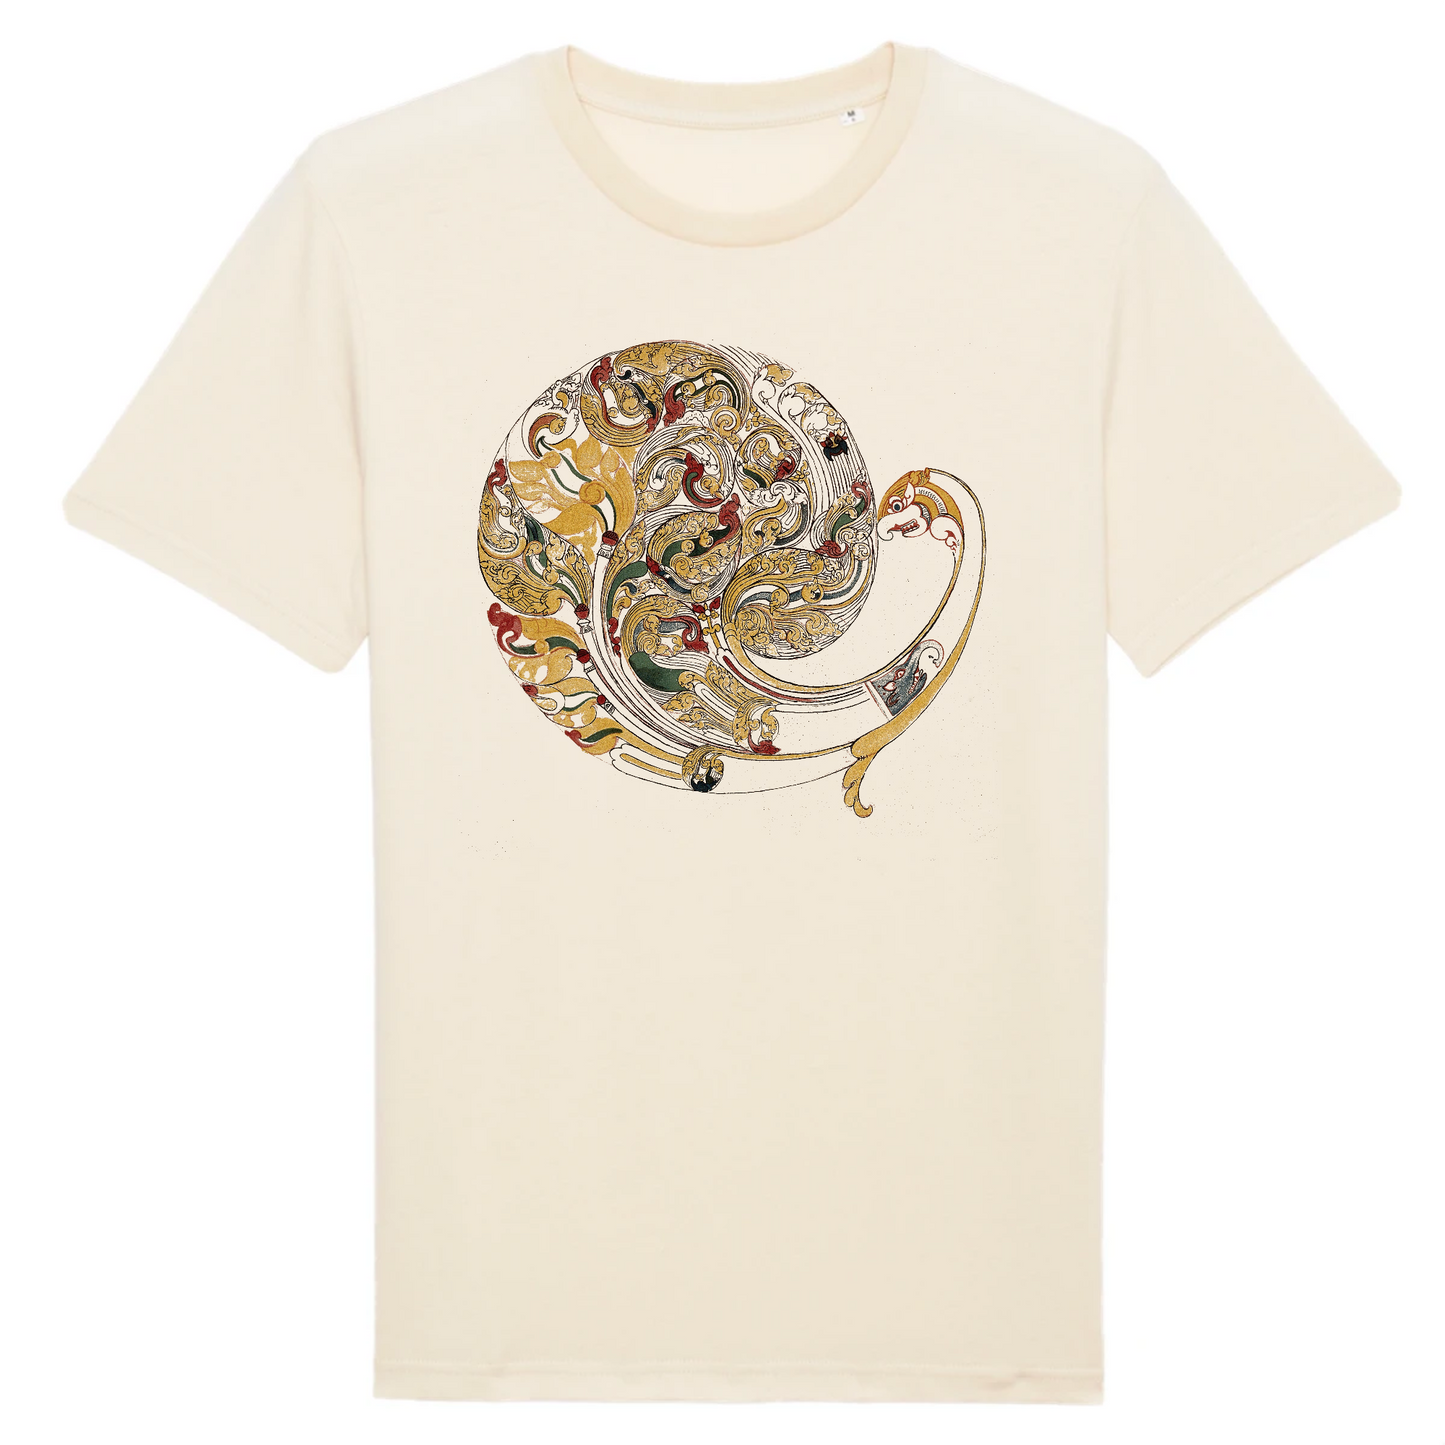 Yali, A Mythical Creature - Organic Cotton T-Shirt